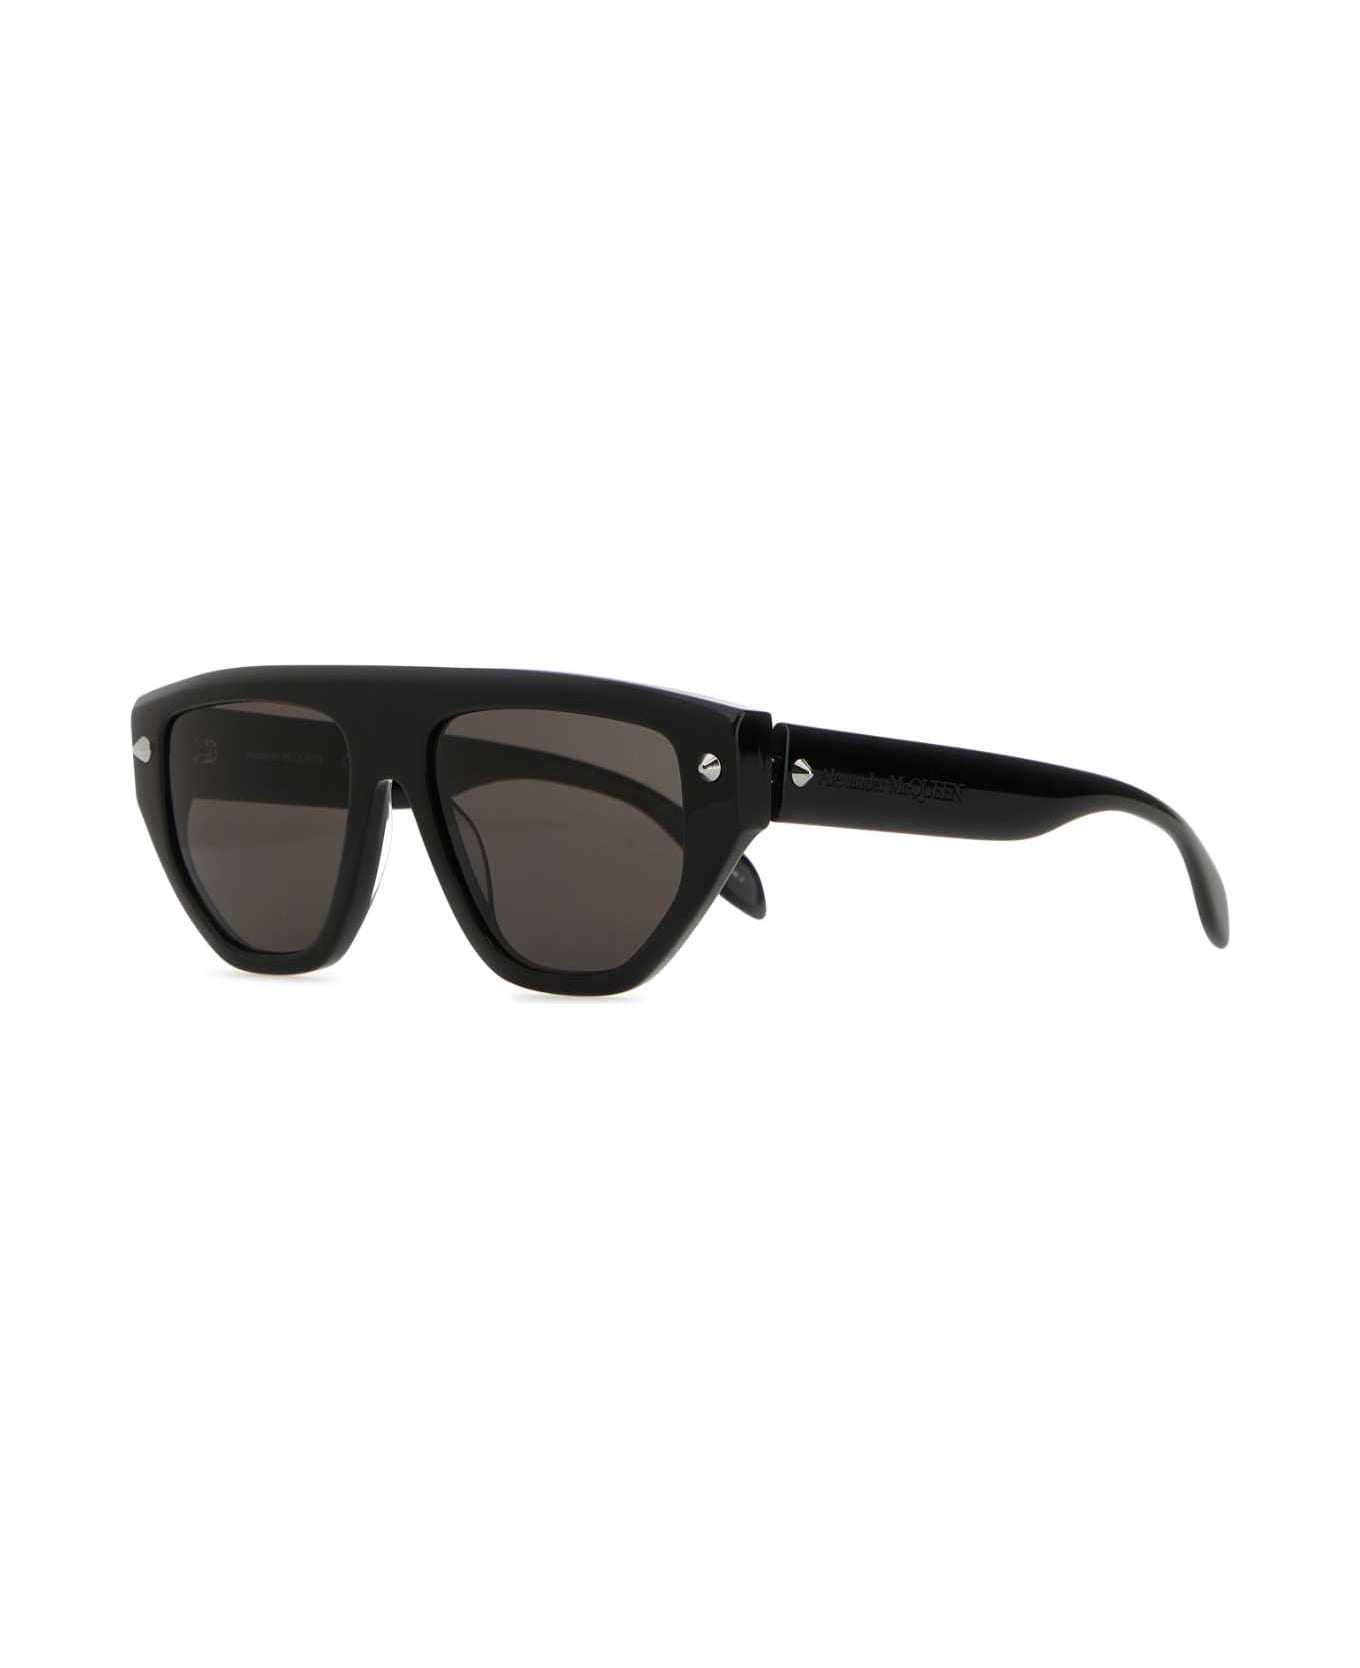 Alexander McQueen Black Acetate Sunglasses - BLACK-BLACK-SMOKE